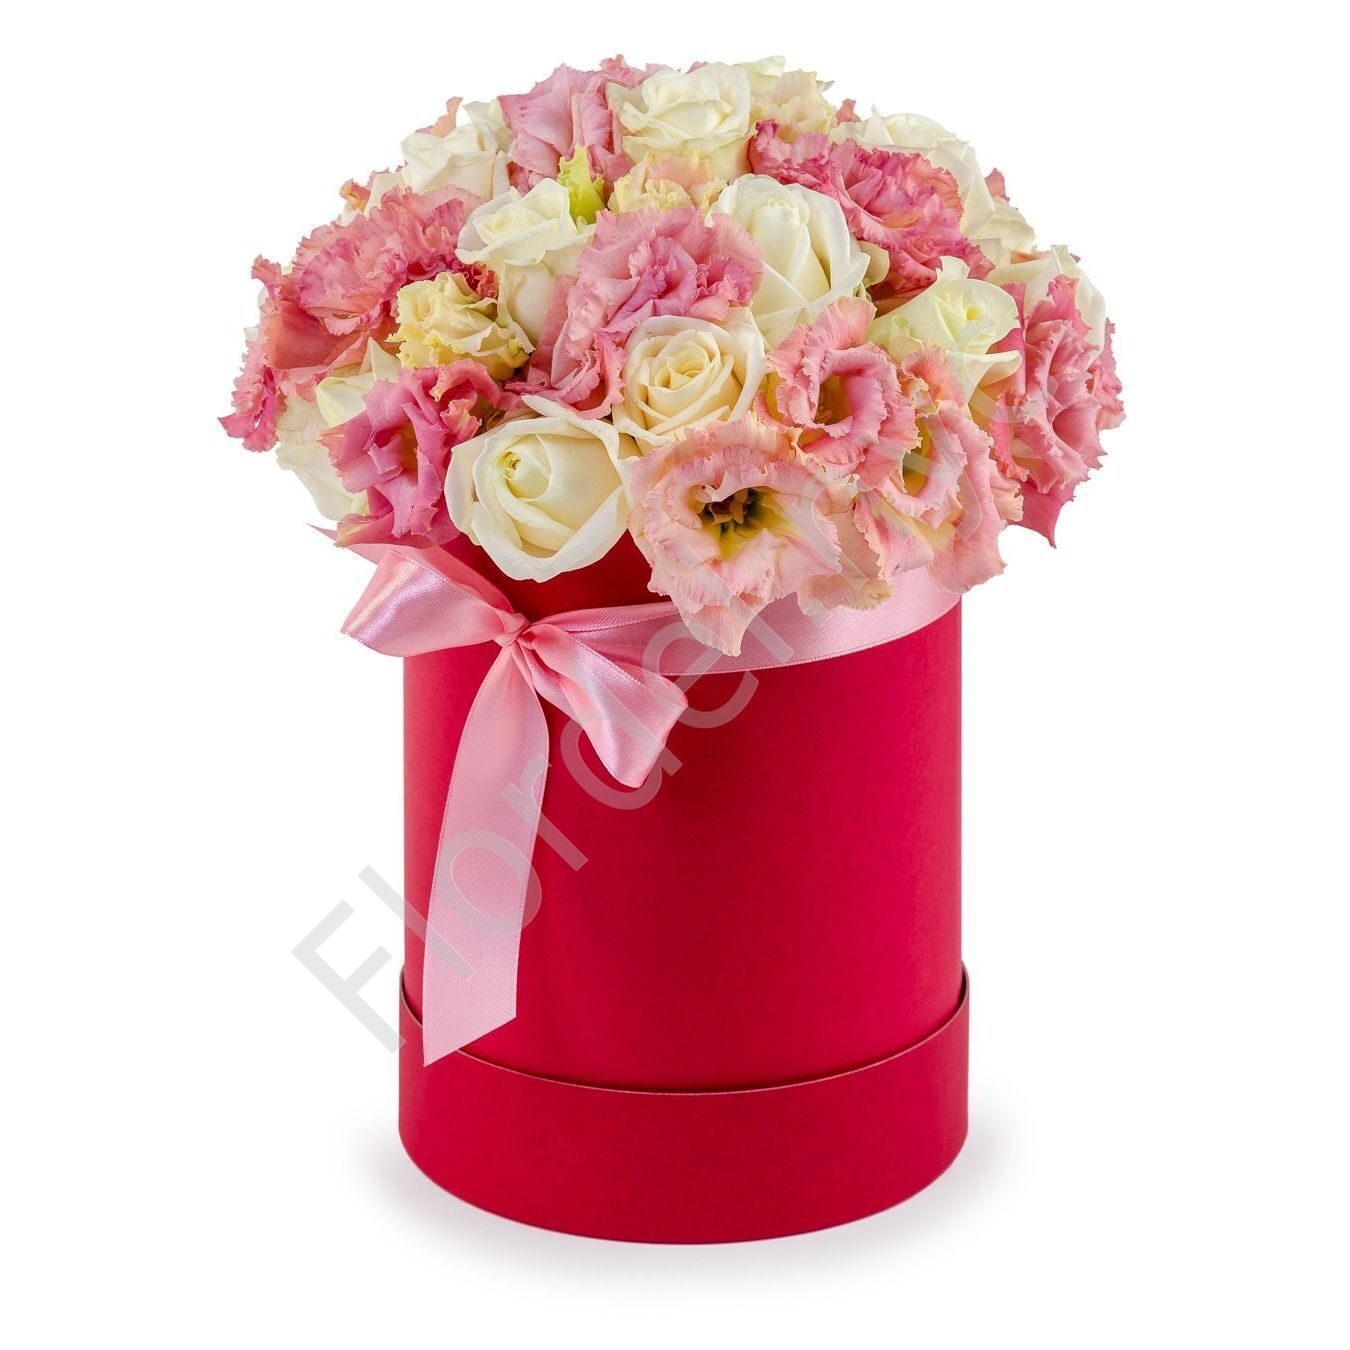 Gpo flowers. Цветы в коробке. Букеты цветов в коробках. Коробки для цветов. Букет в круглой коробке.